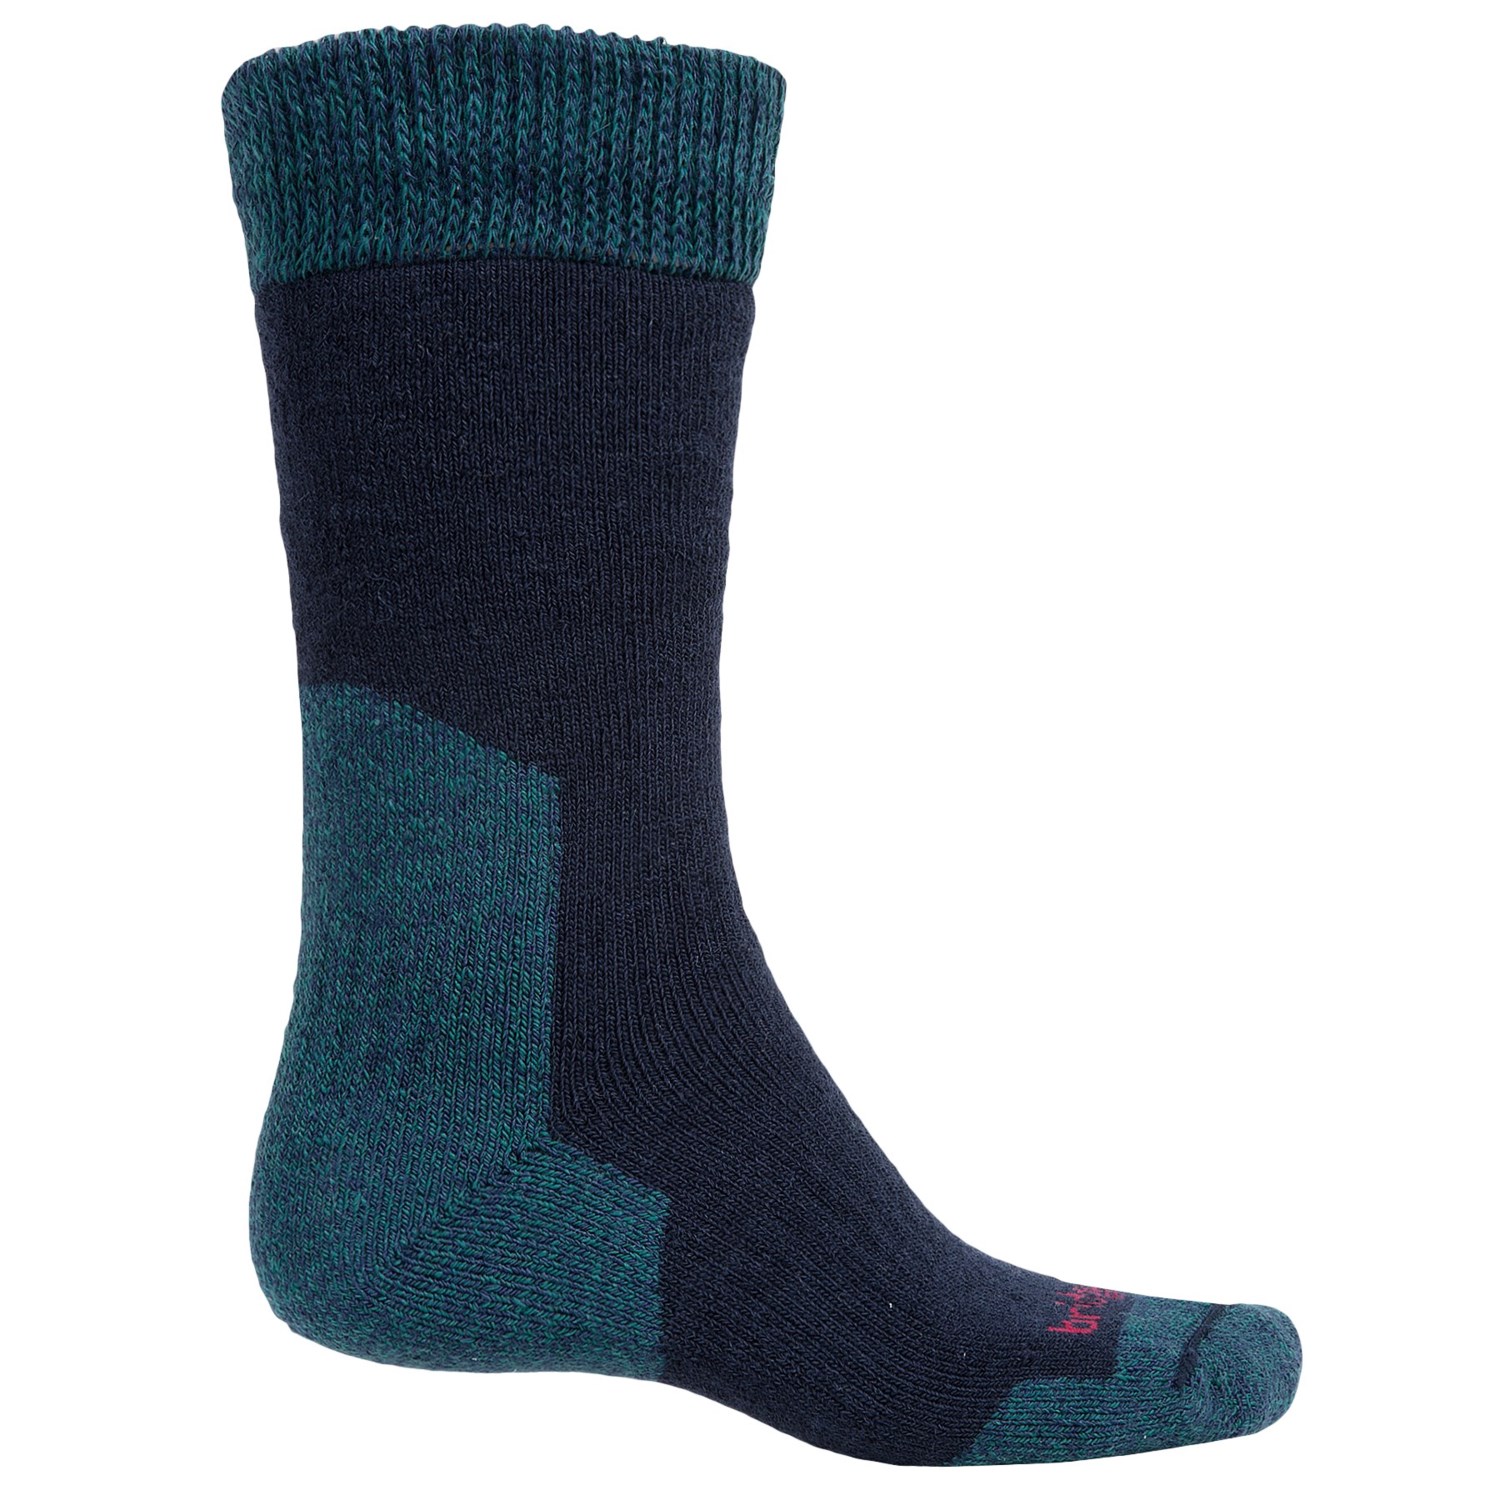 Bridgedale MerinoFusion Summit Boot Socks (For Men) - Save 60%